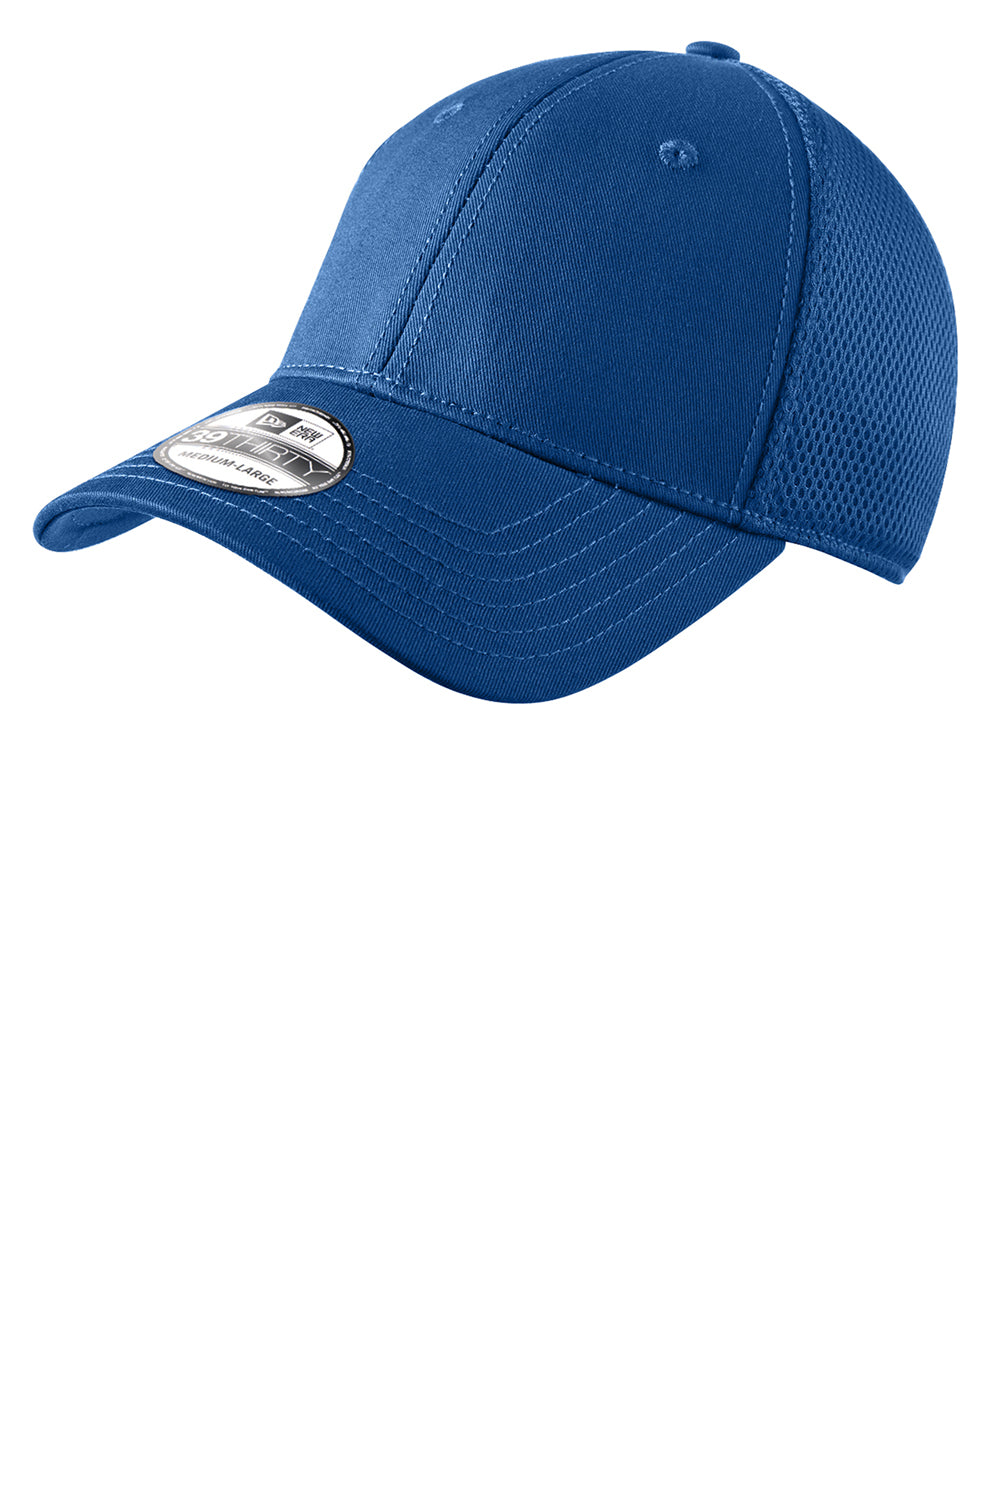 New Era NE1020 Mens Stretch Fit Hat Royal Blue Front